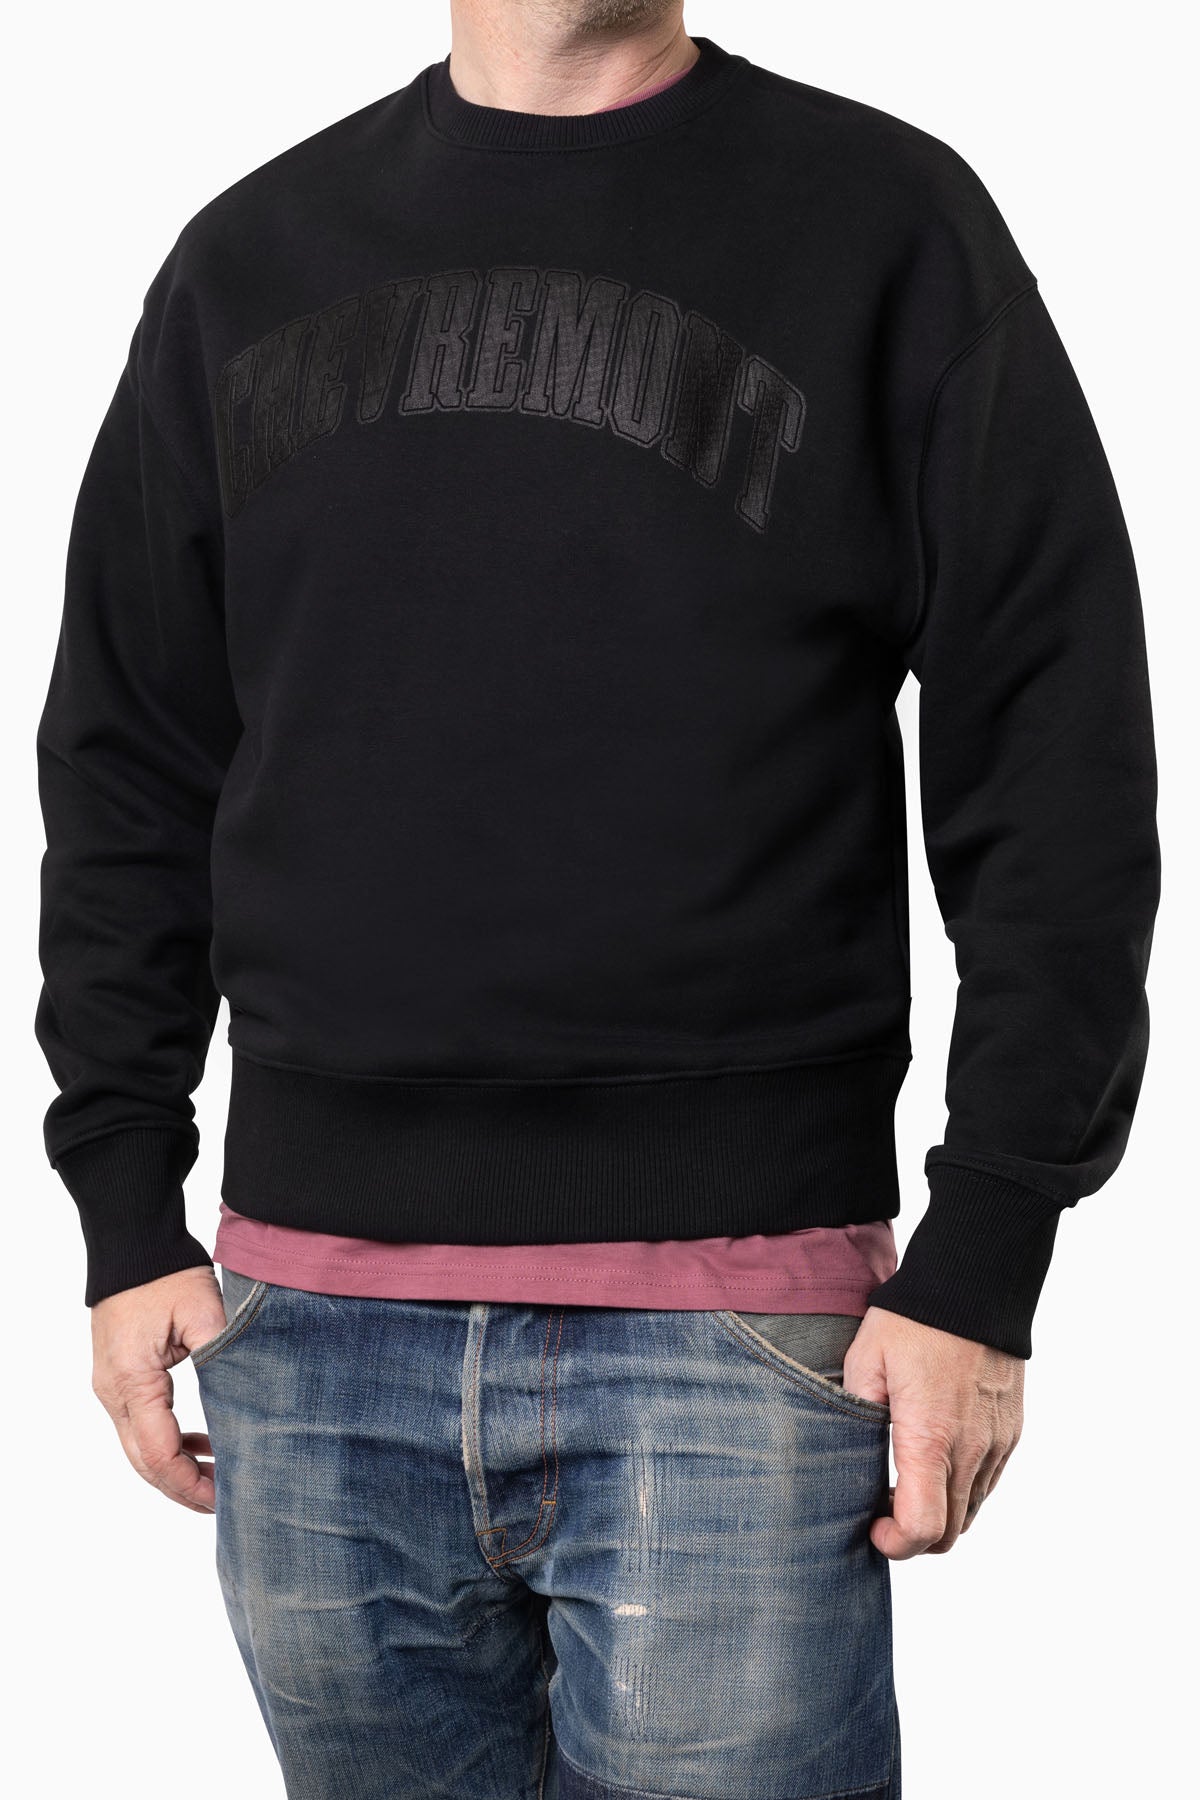 Oversized Sweater Chevremont black on black